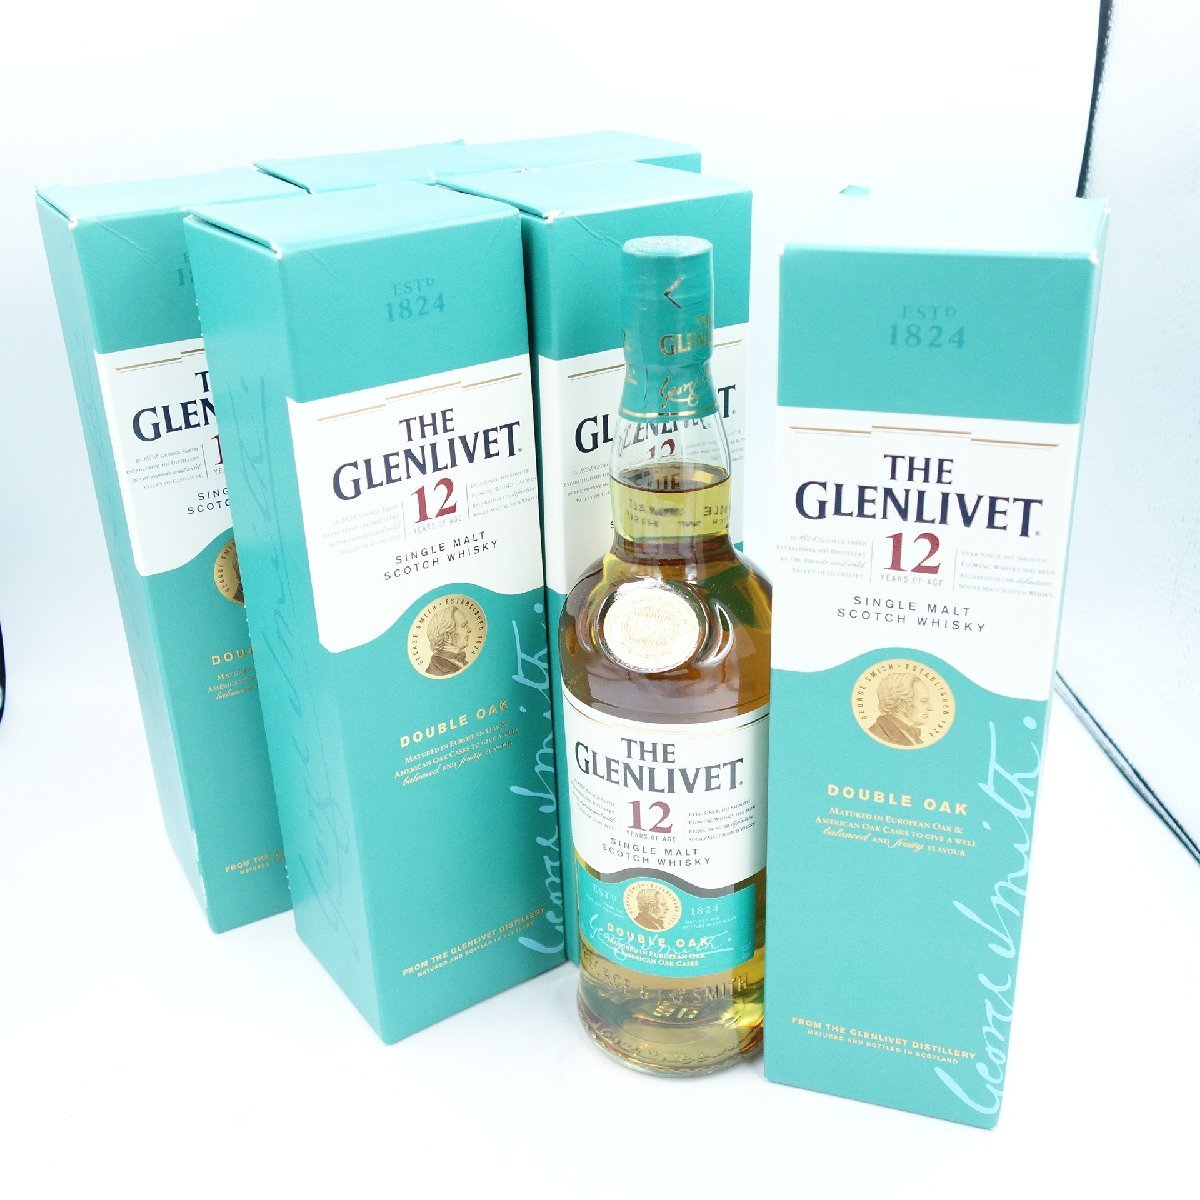 THE GLENLIVET 12年 シングルモルト ウイスキー